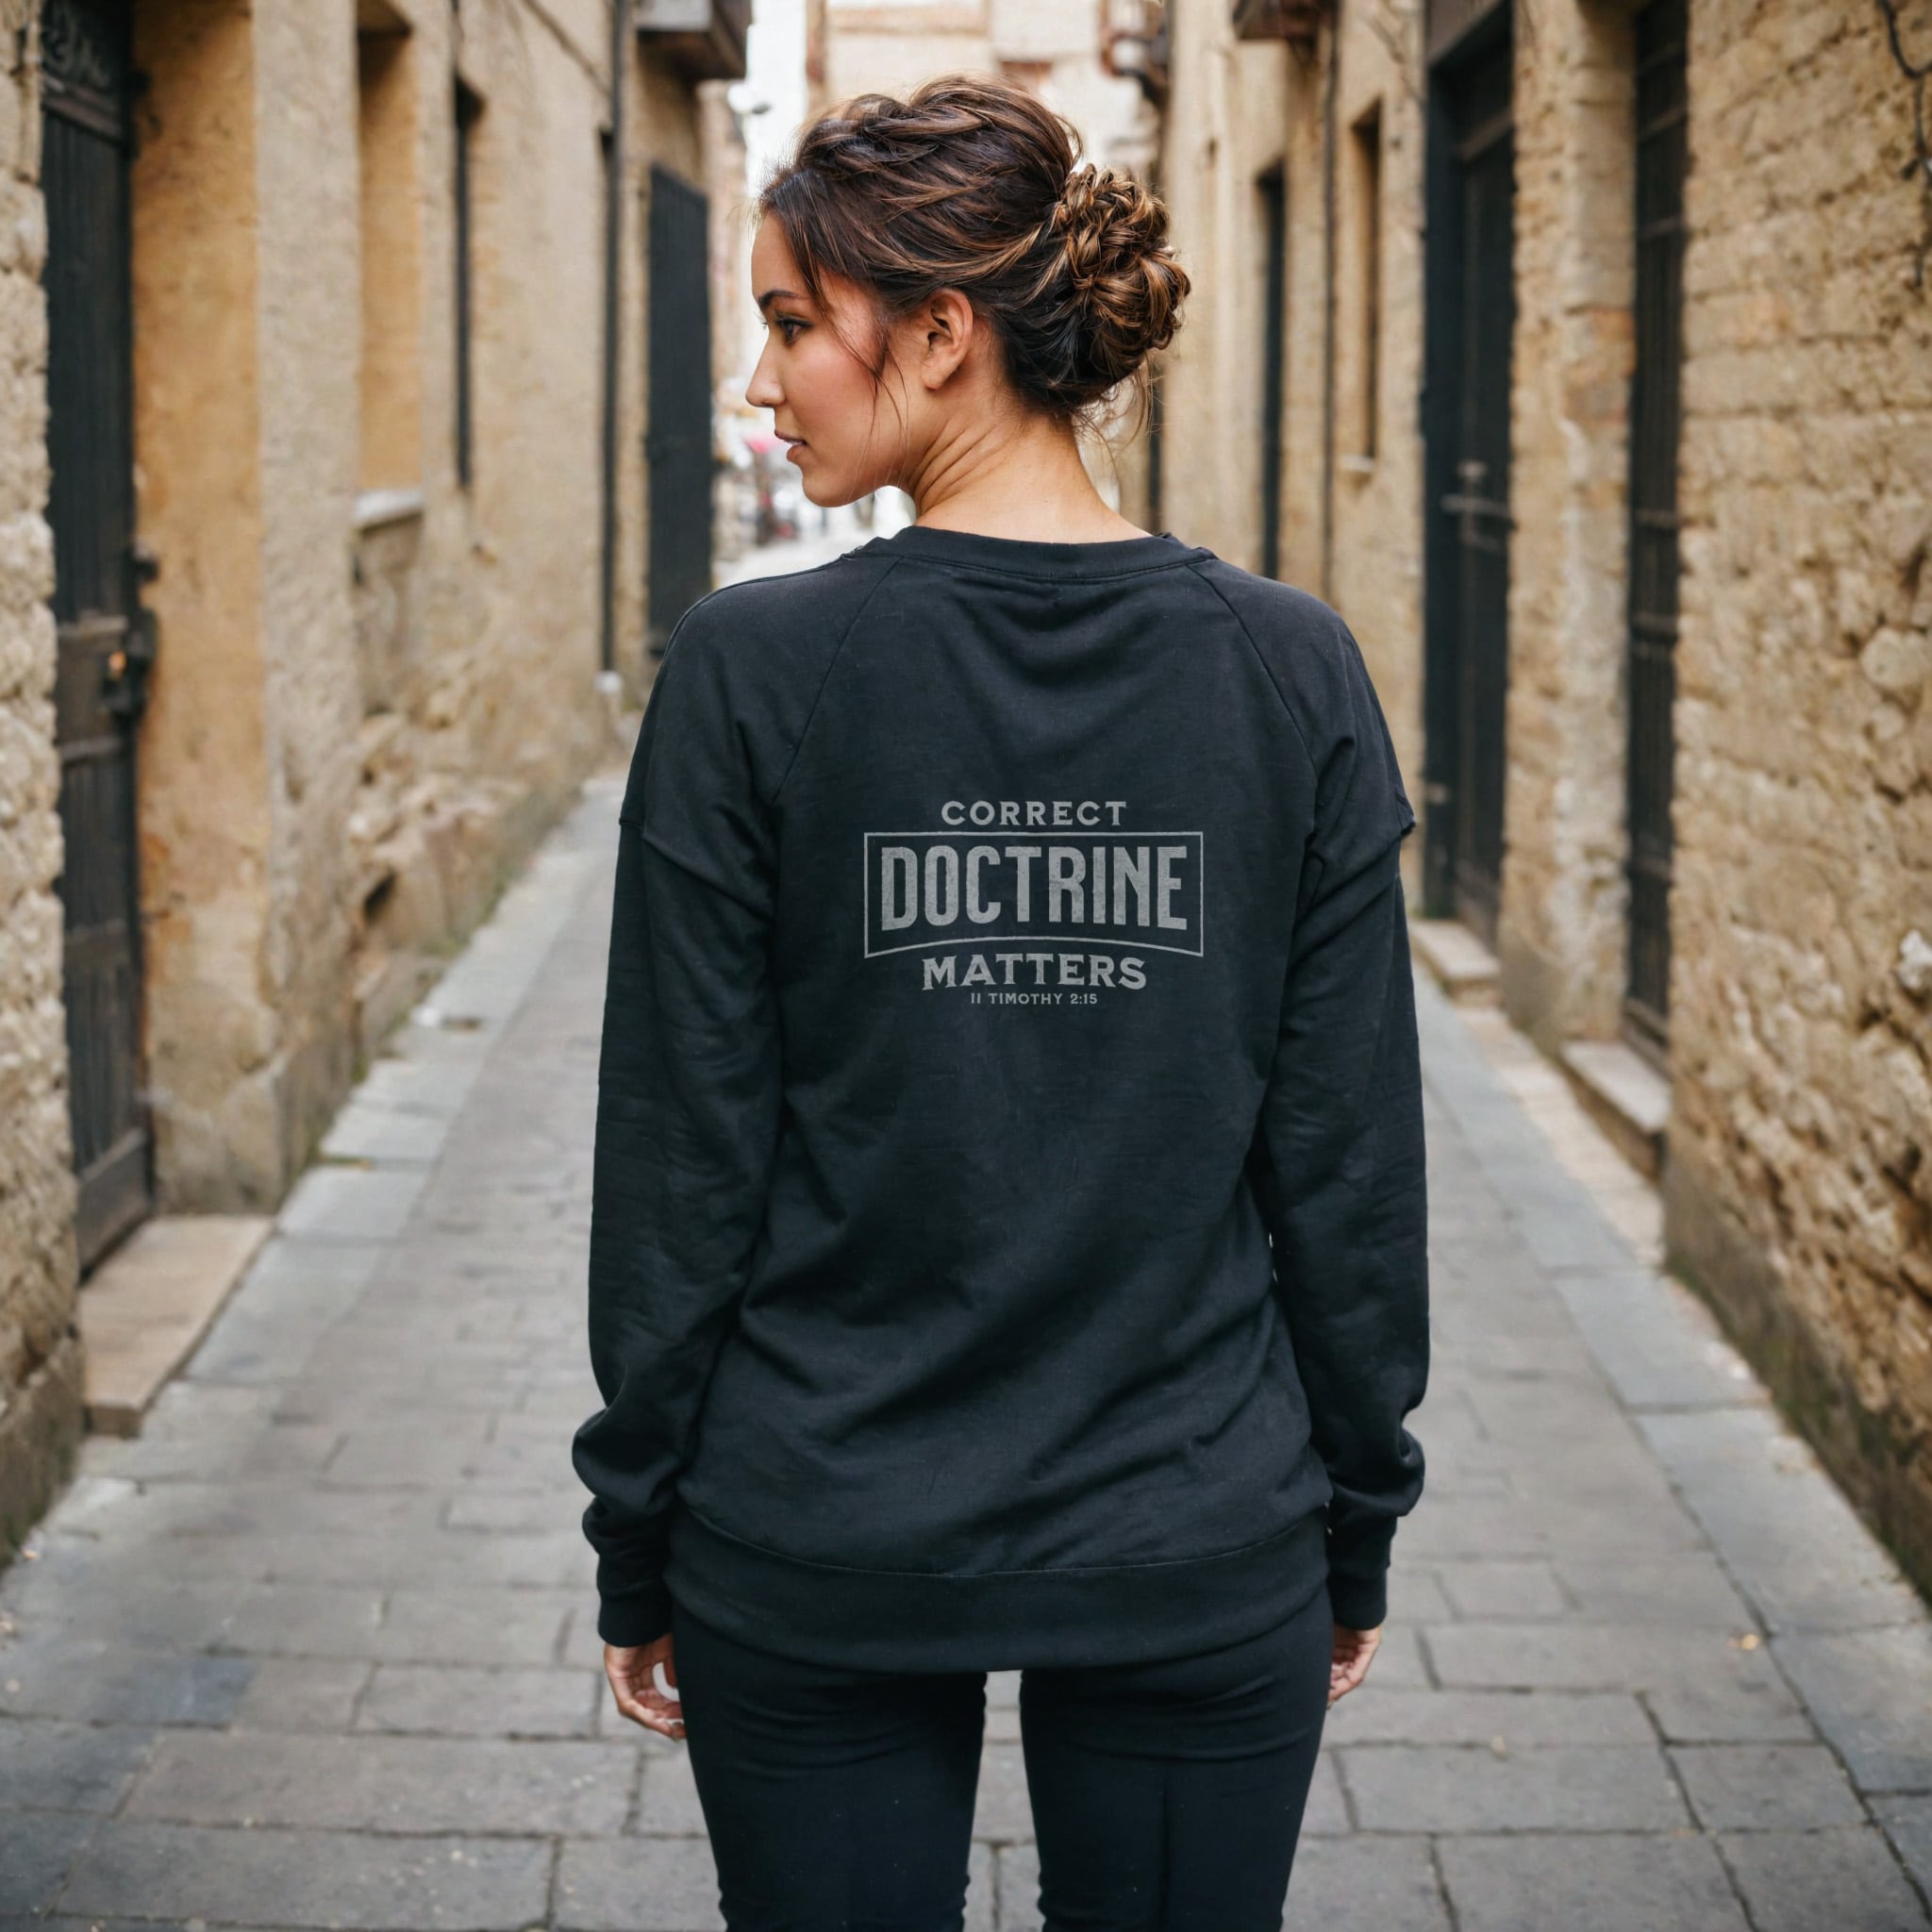 Correct Doctrine Matters sweatshirt in black